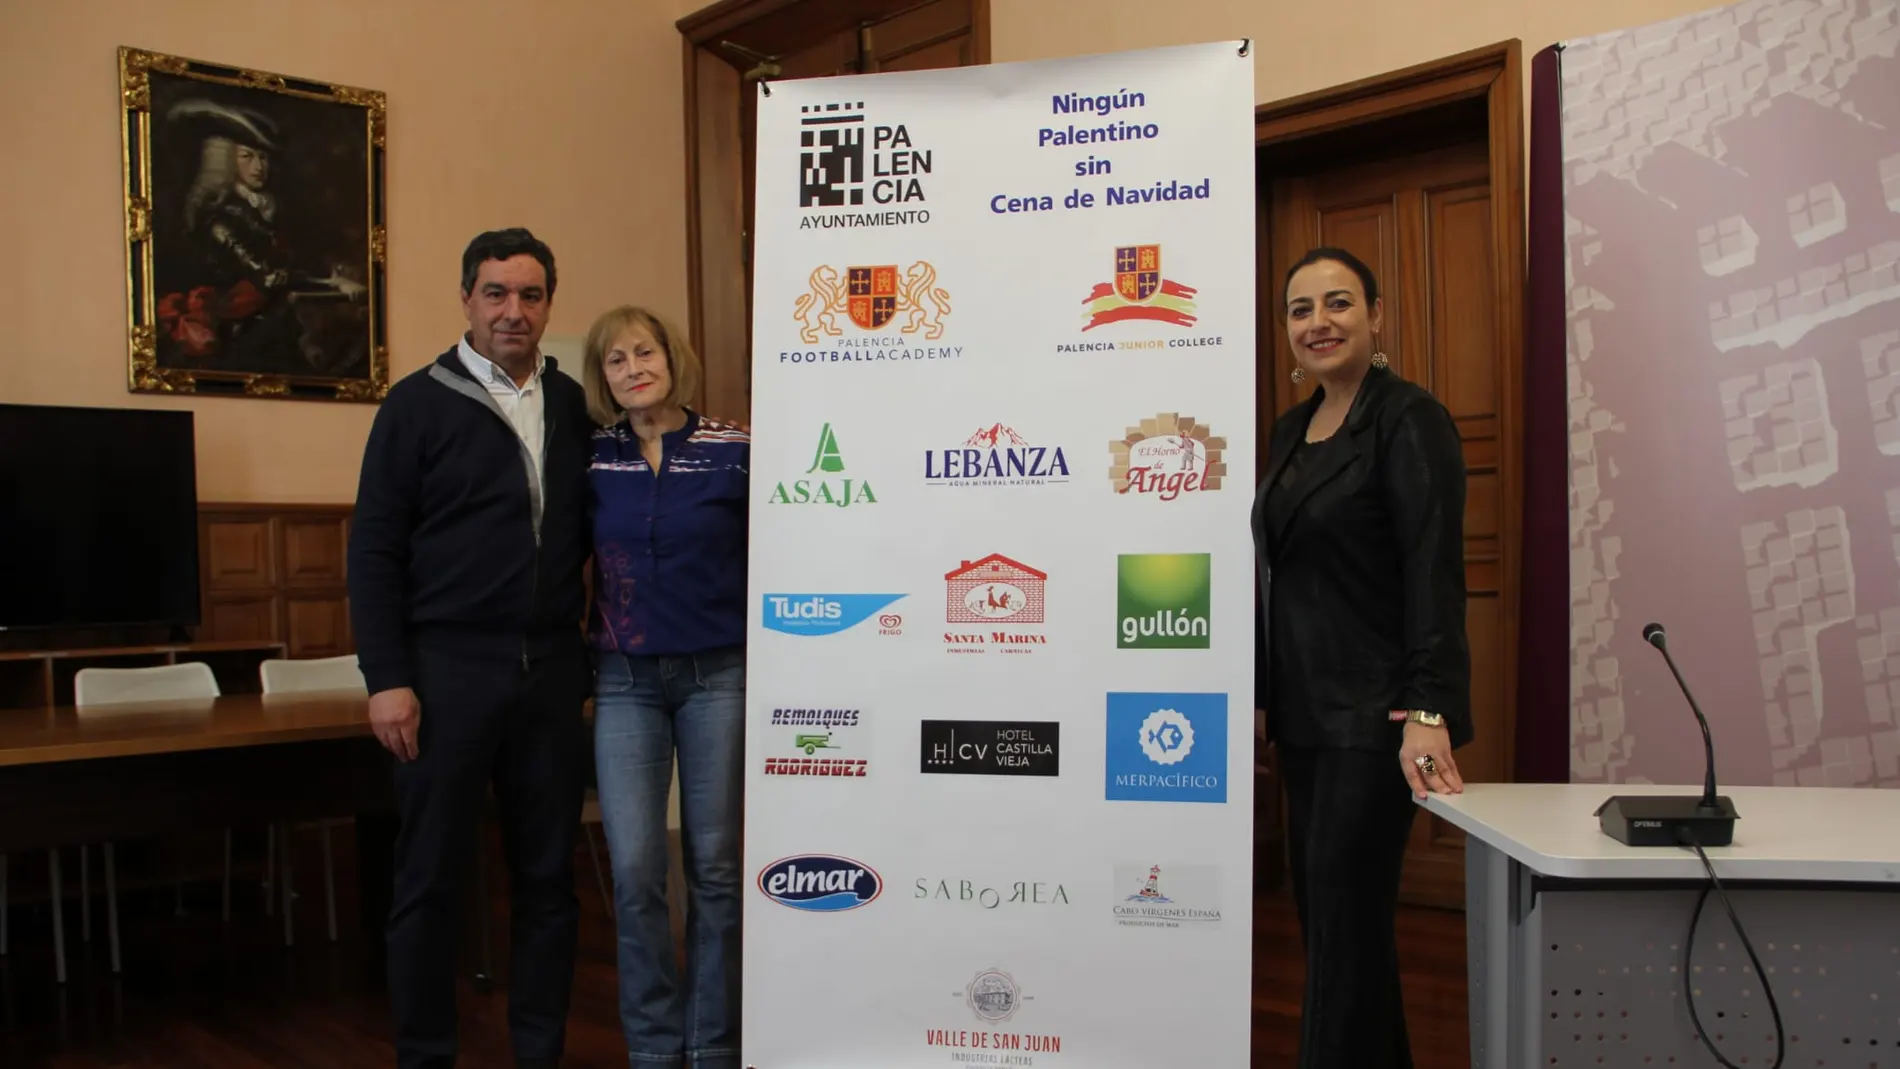 La alcaldes de Palencia, Miriam Andrés, presenta la iniciativa